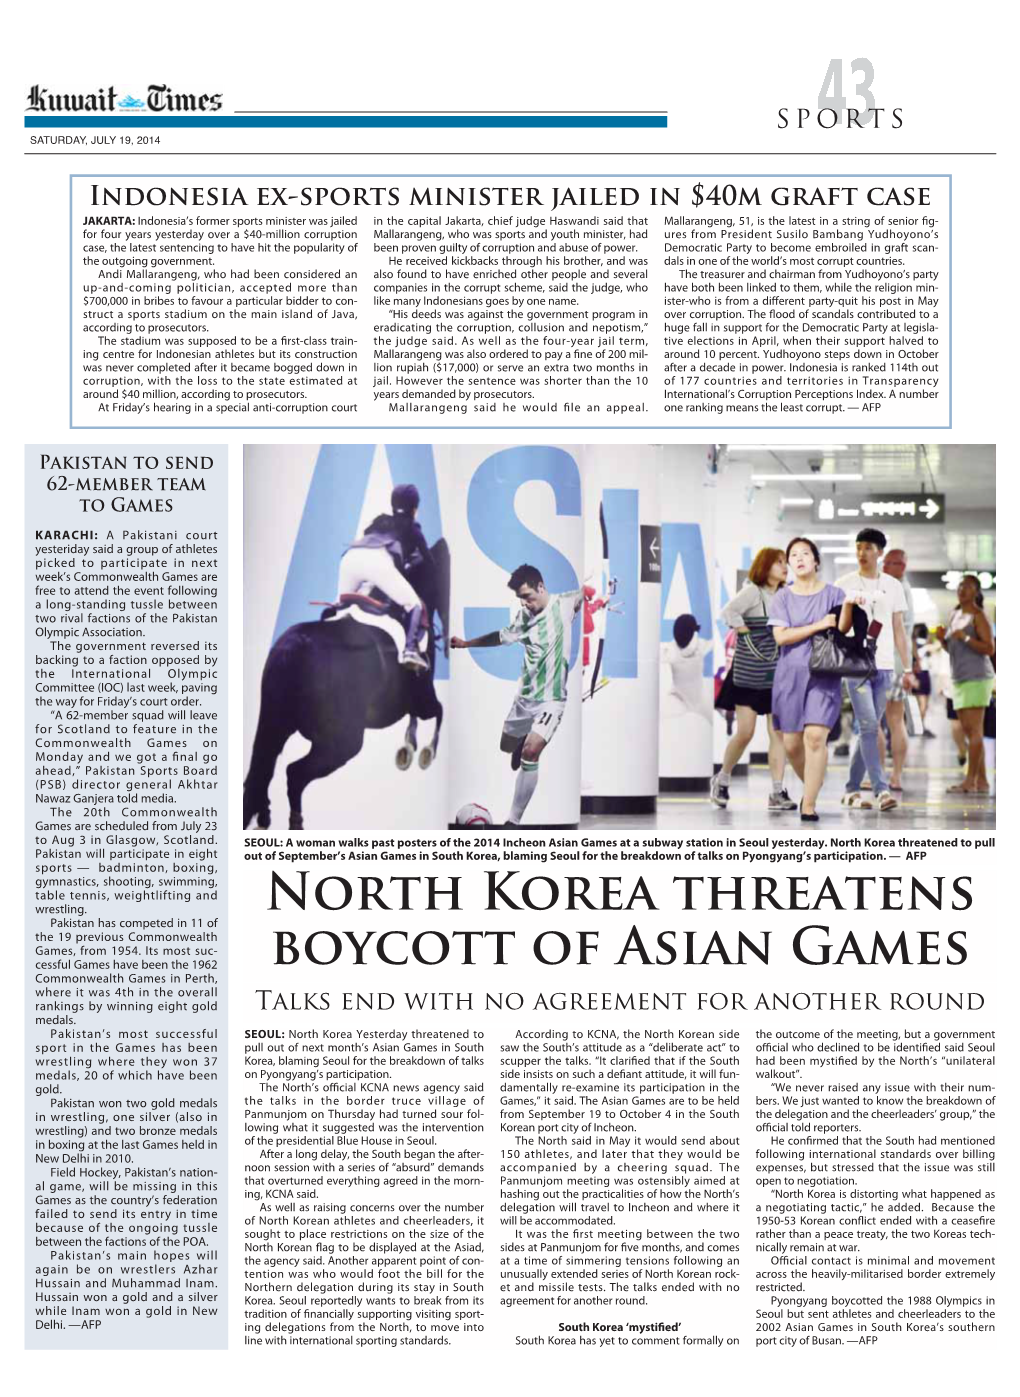 NORTH KOREA THREATENS Boycott of ASIAN GAMES